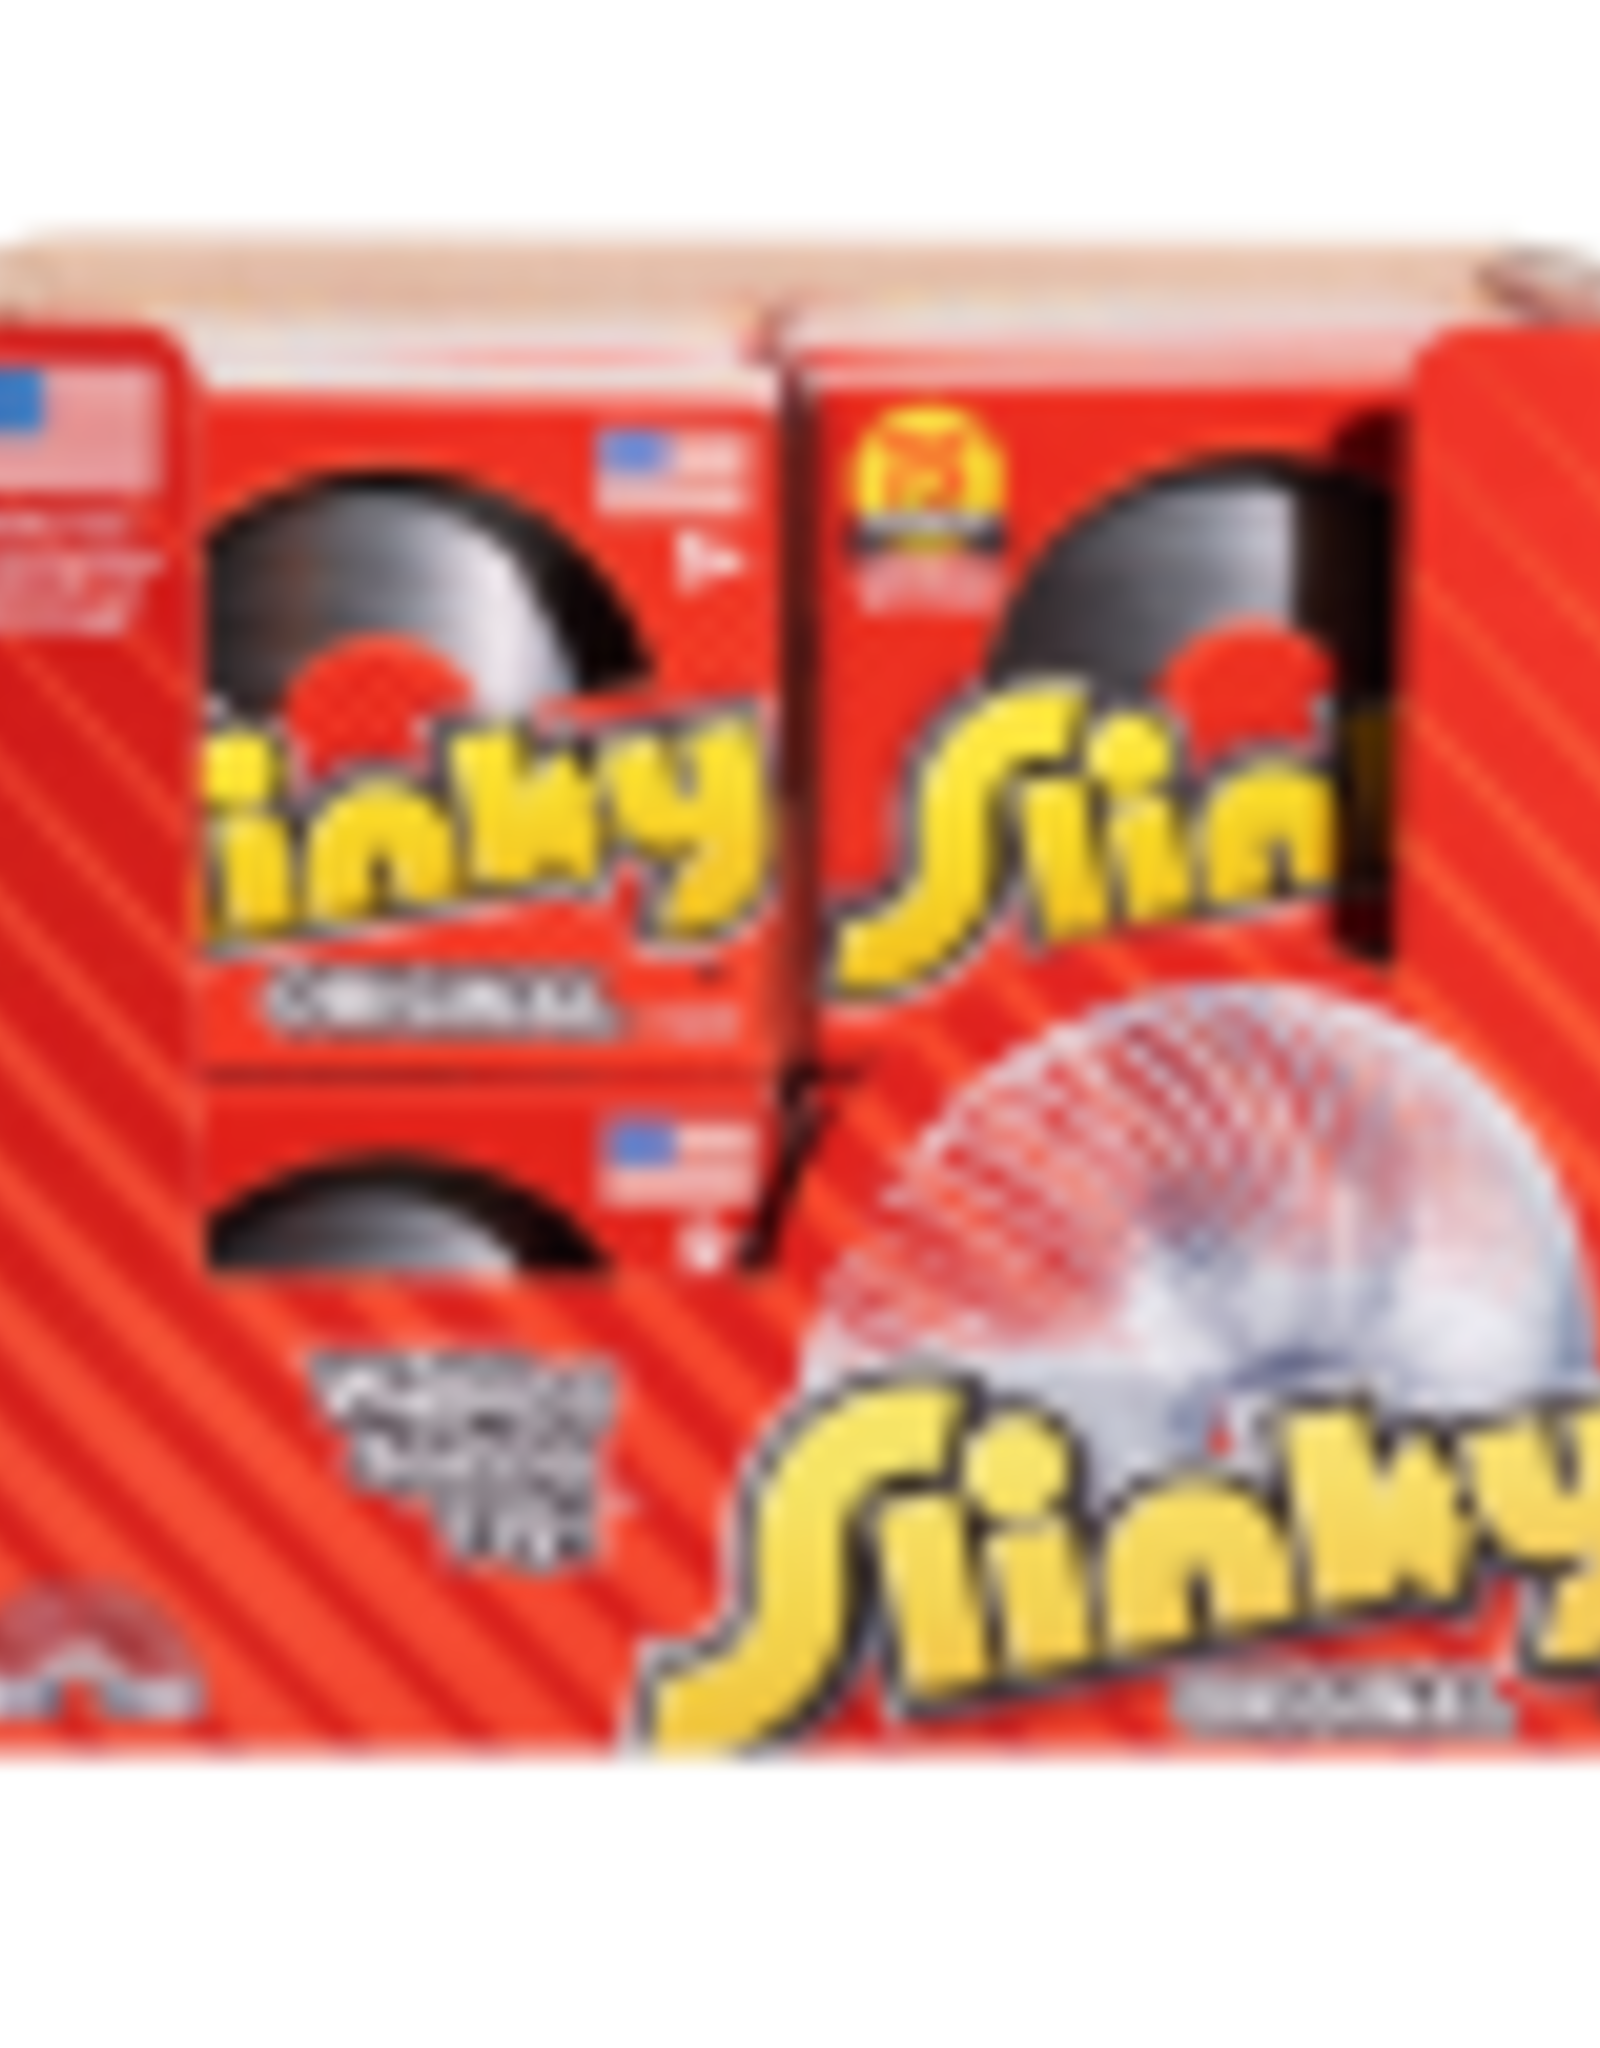 Kidtoy Original Metal Slinky